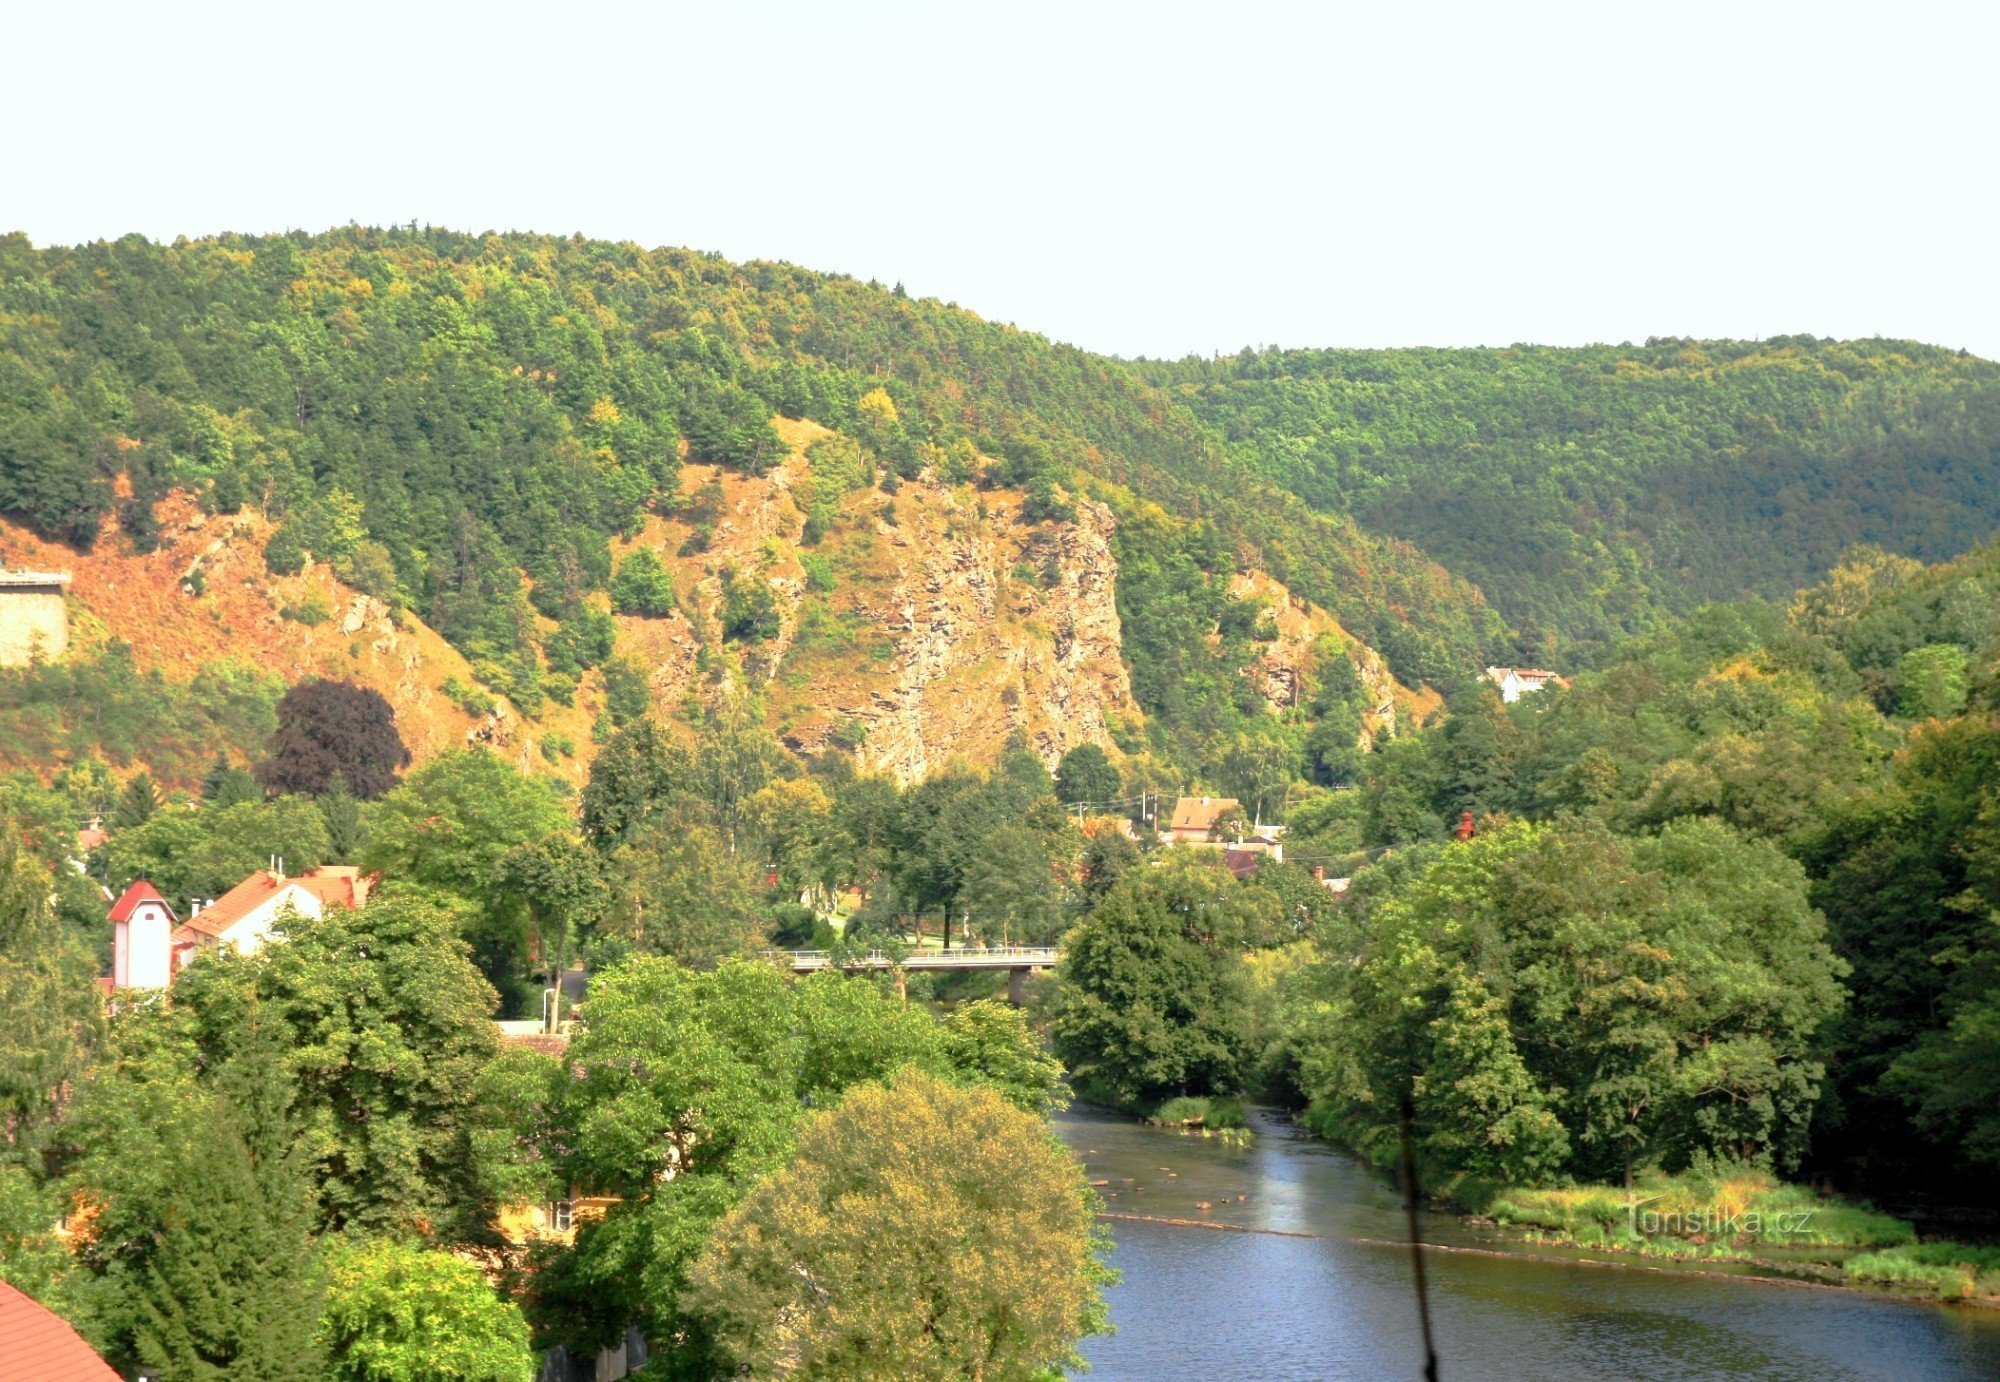 Hamerské údolí from the Vranov castle